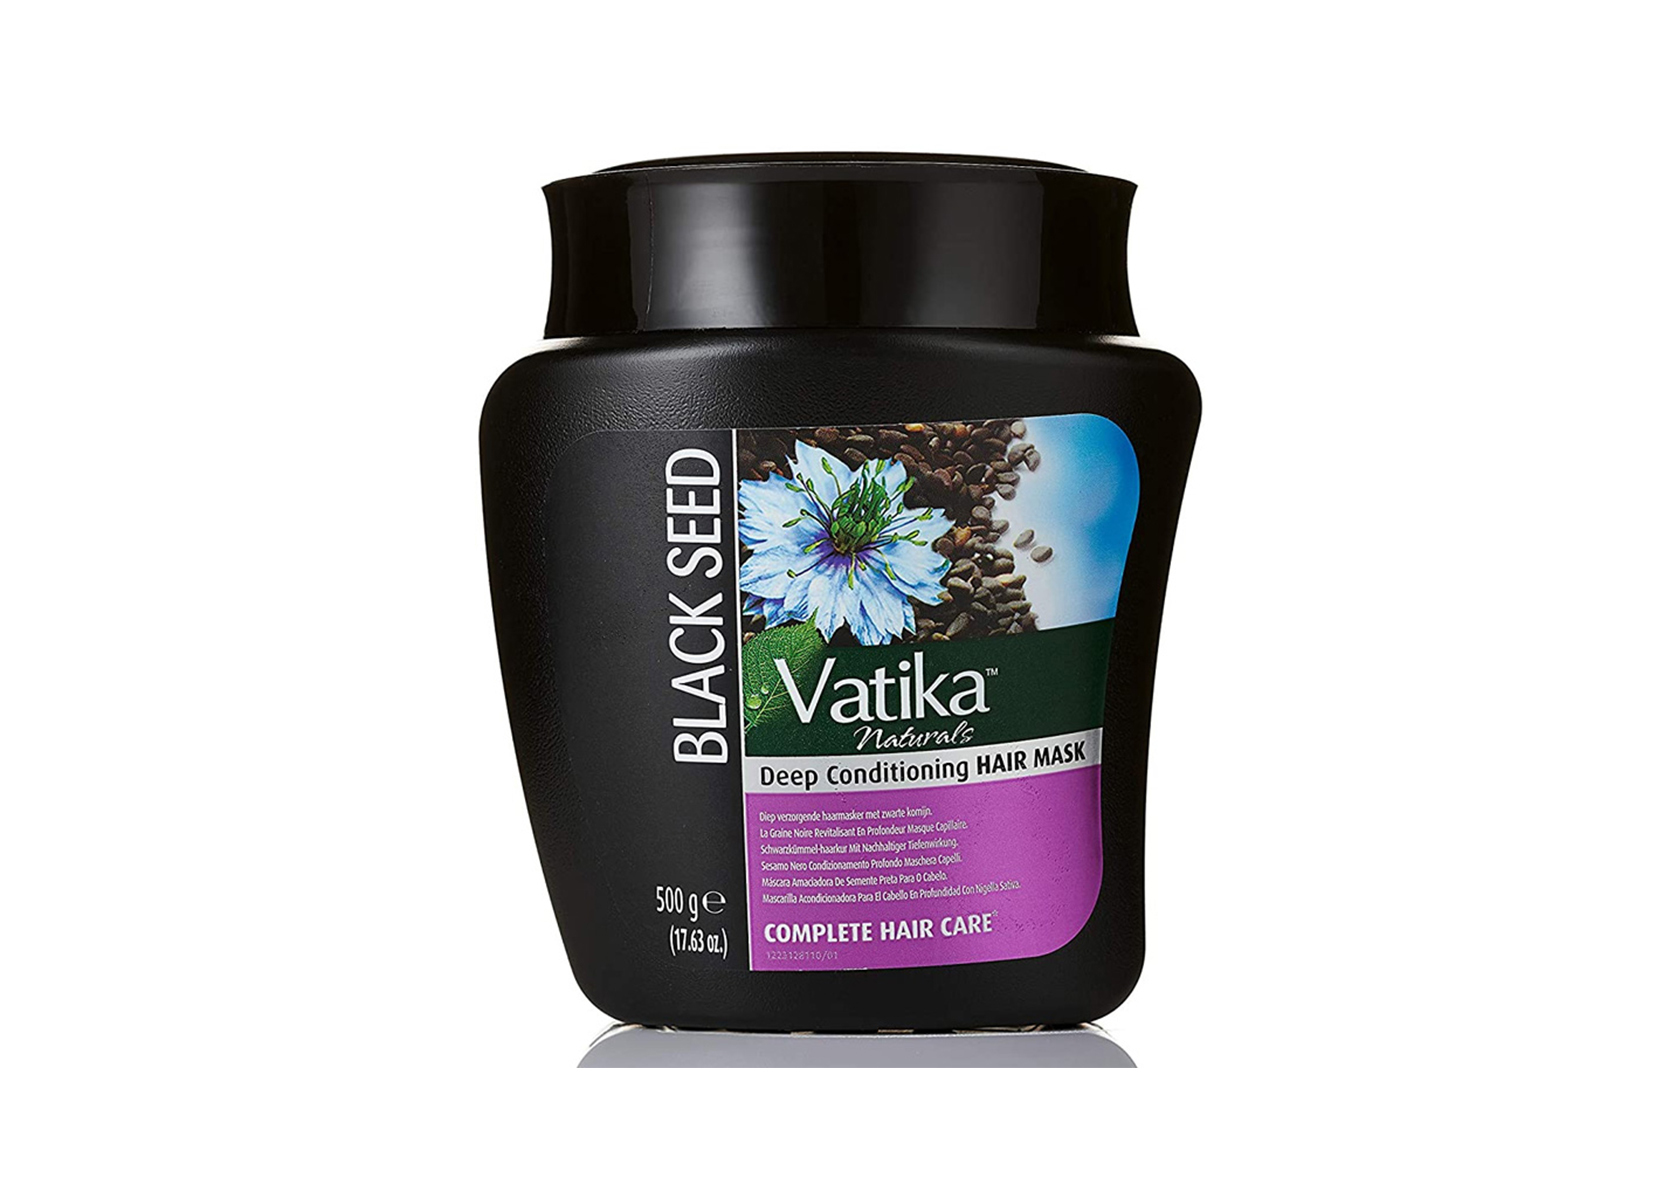 Маска для волос dabur vatika treatment cream-black seed состав